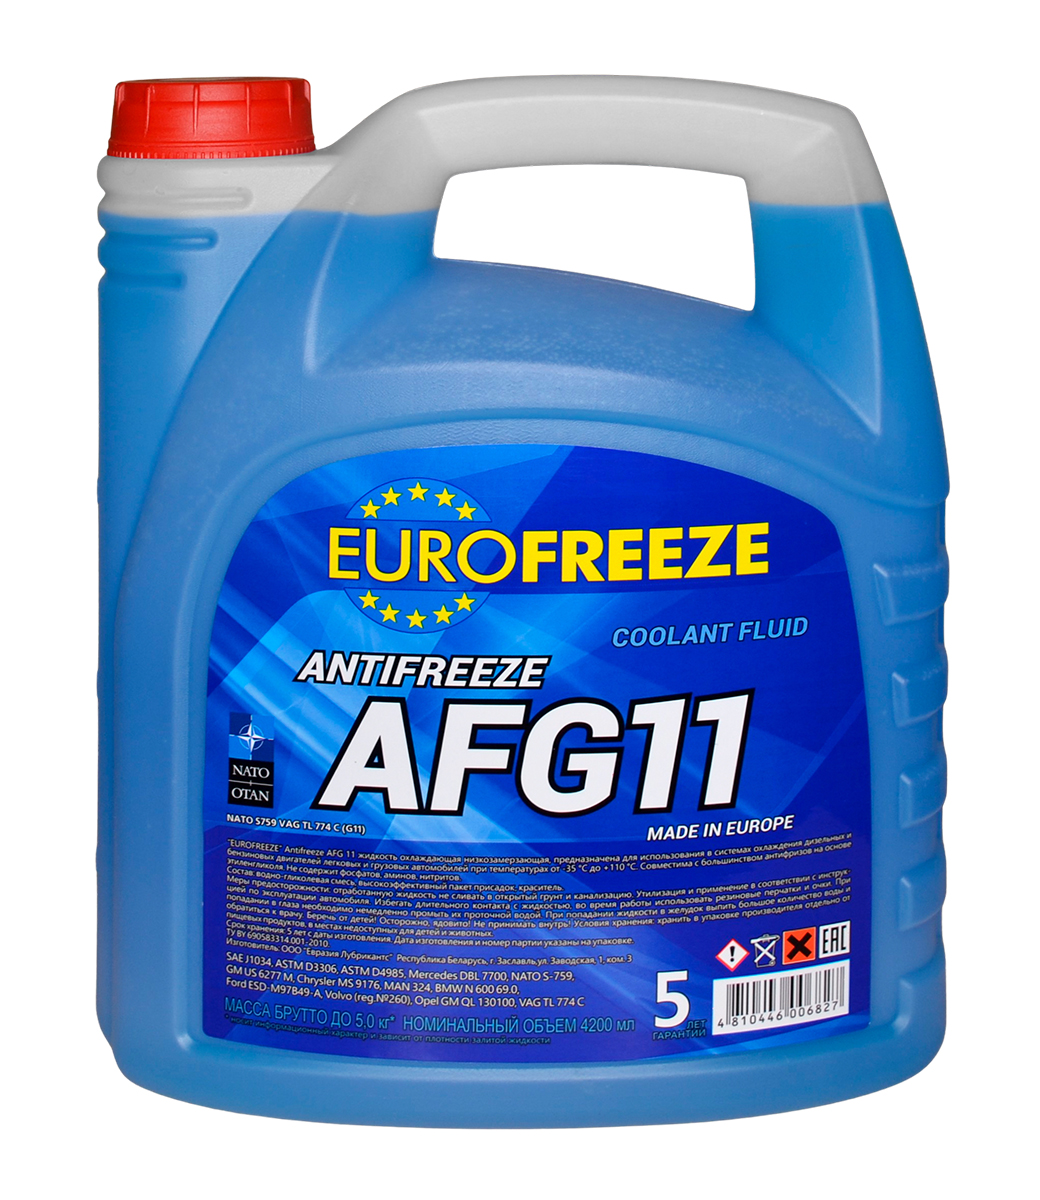 Eurofreeze Antifreeze AFG 11